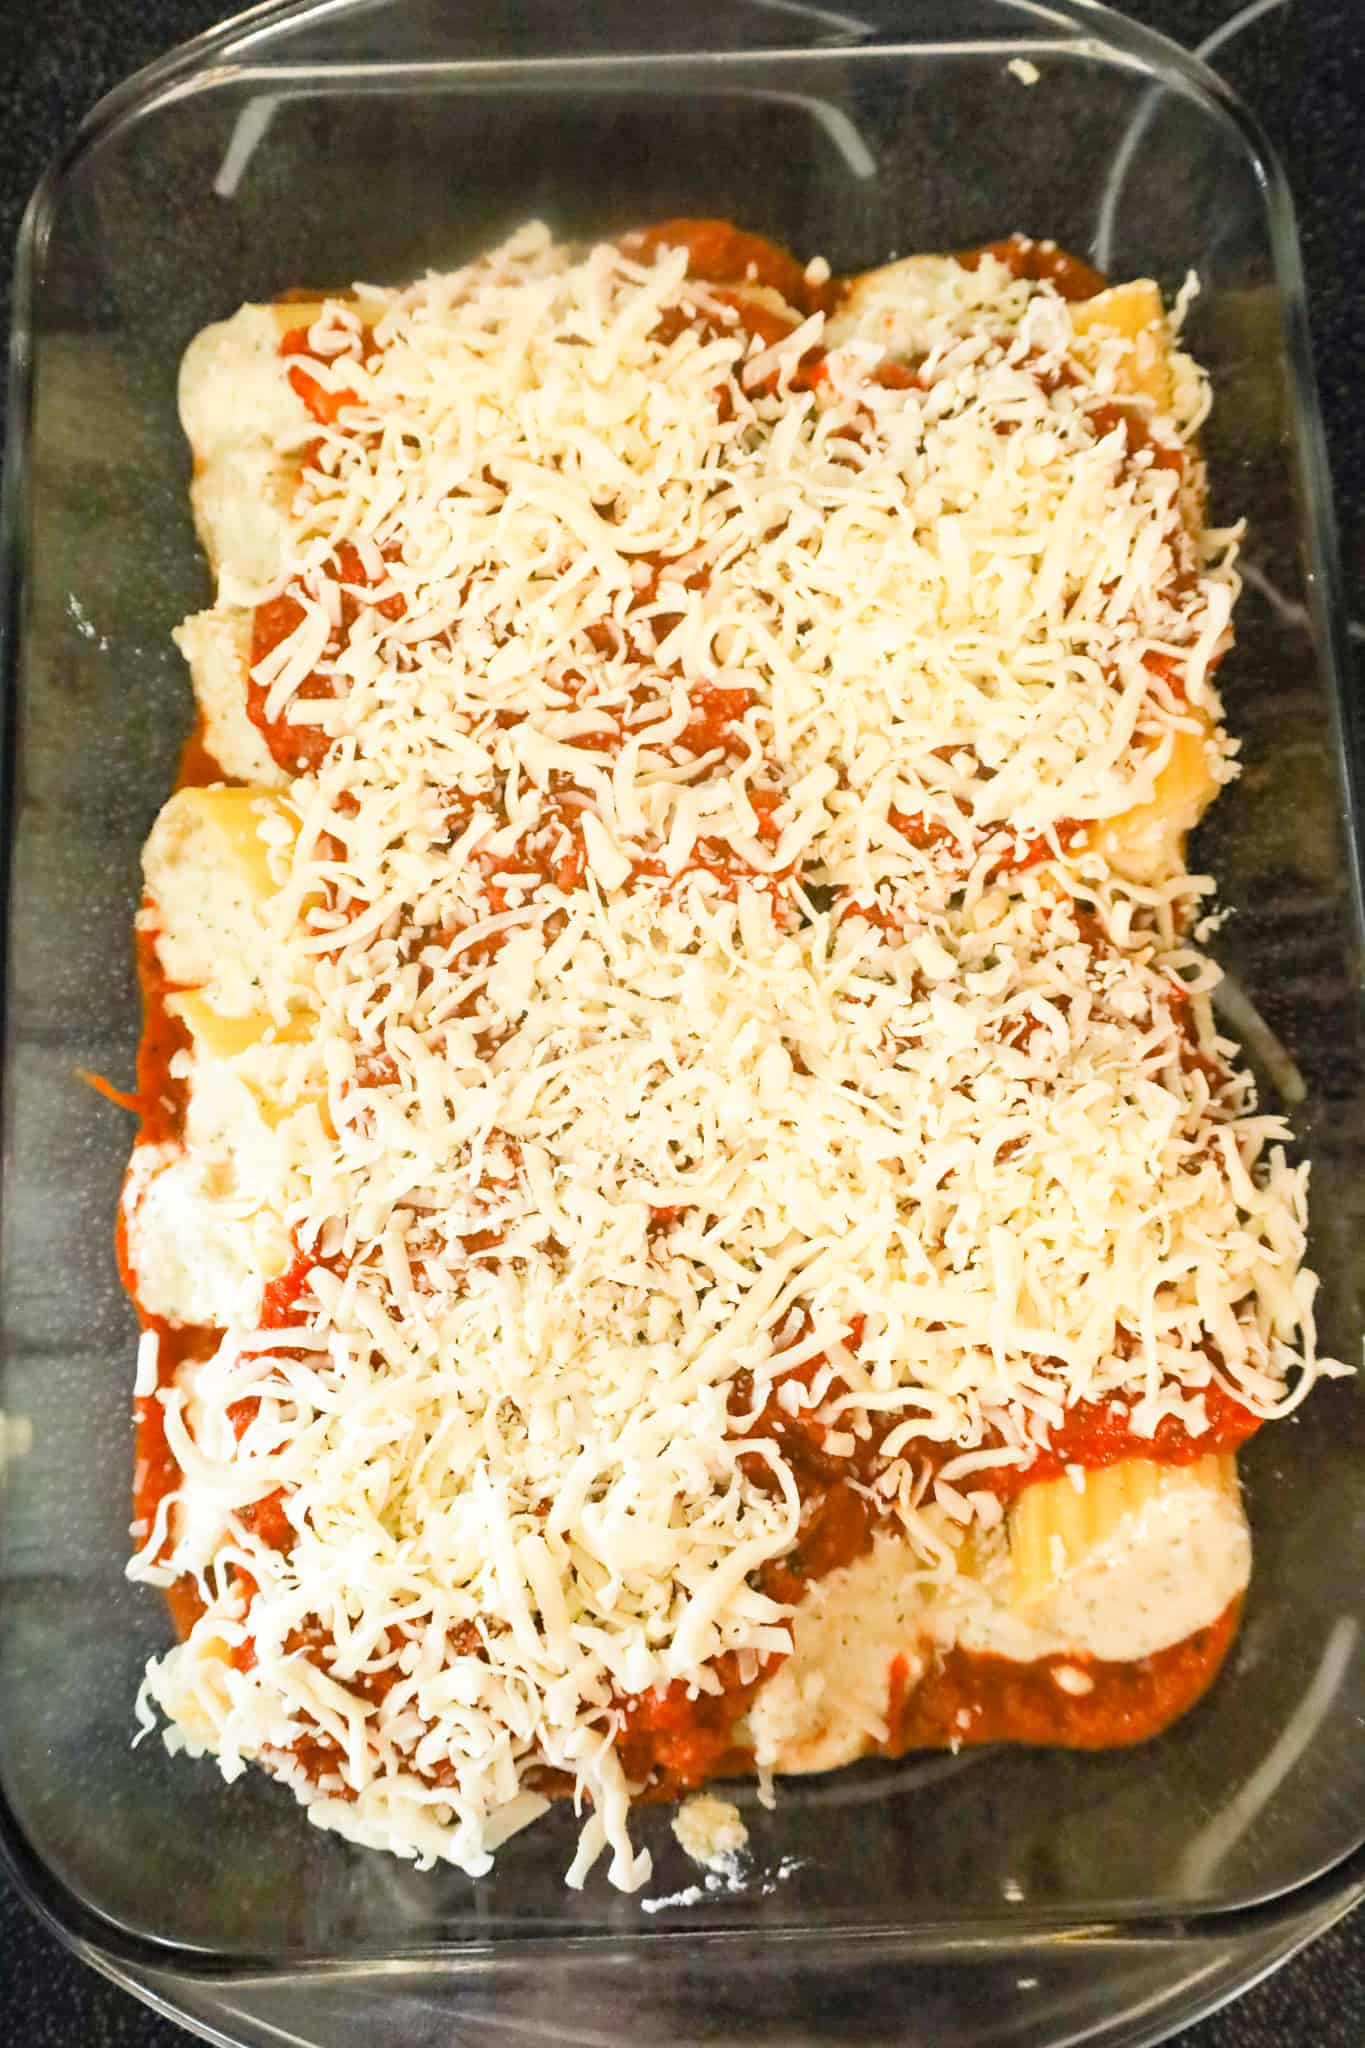 shredded mozzarella on top of manicotti in a baking dish